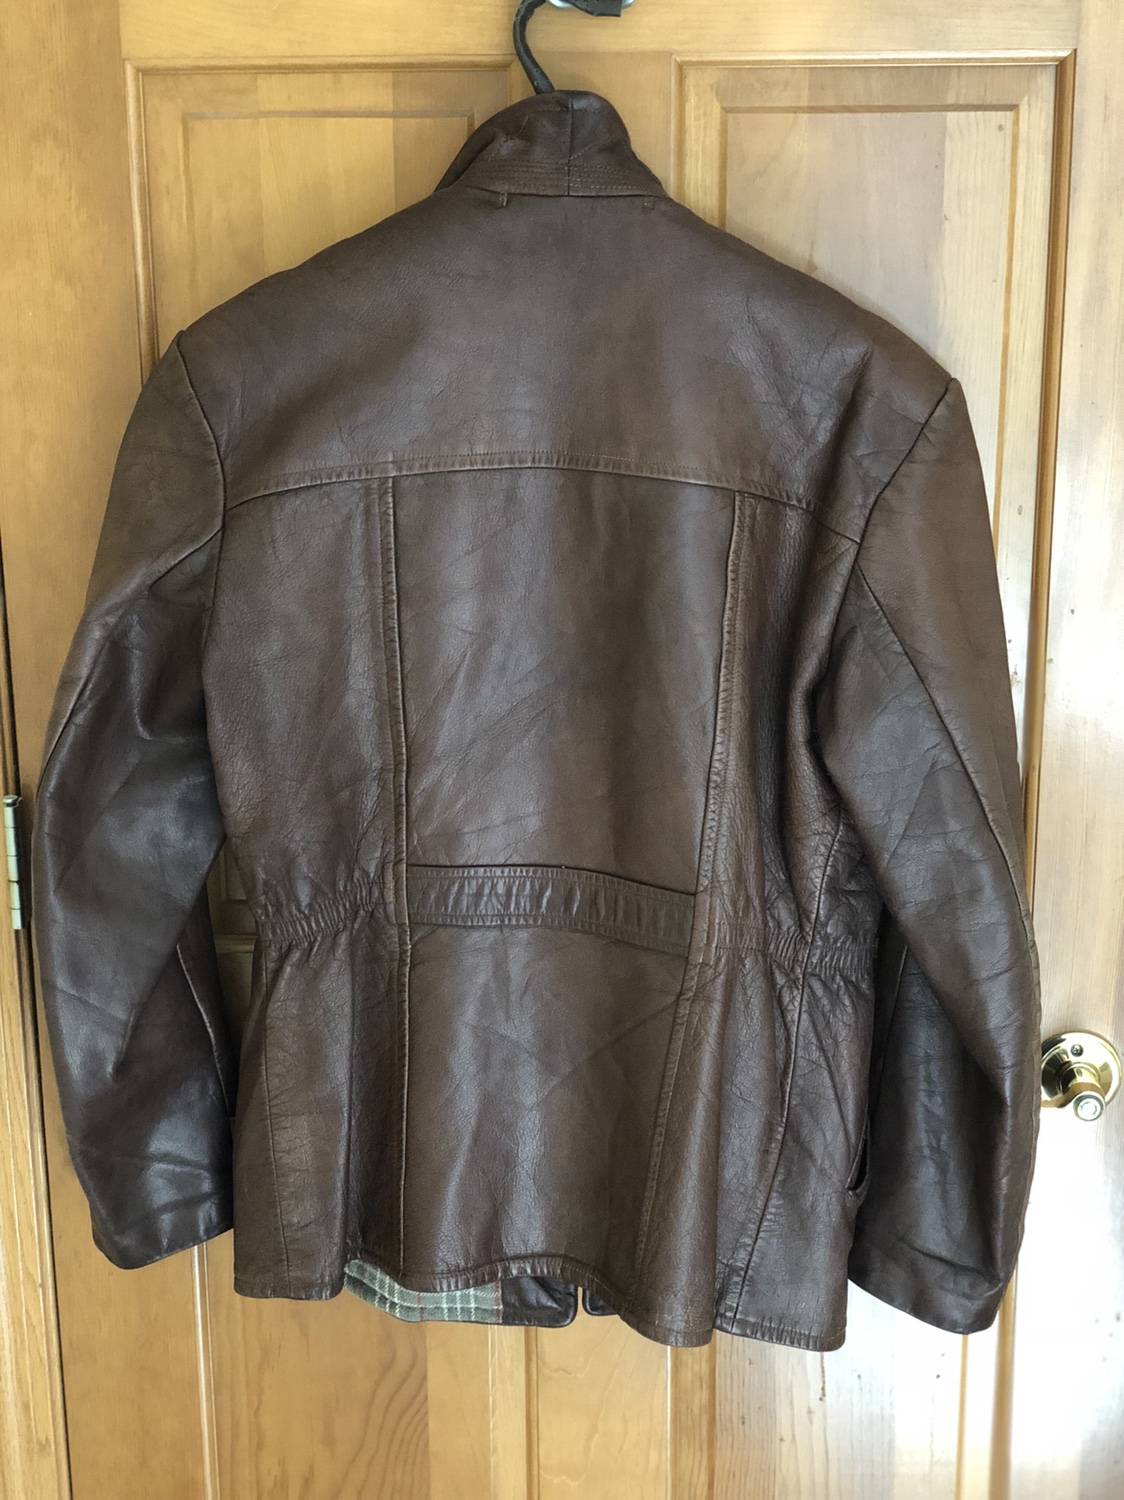 Restoration of vintage 1940s Goatskin jacket | The Fedora Lounge